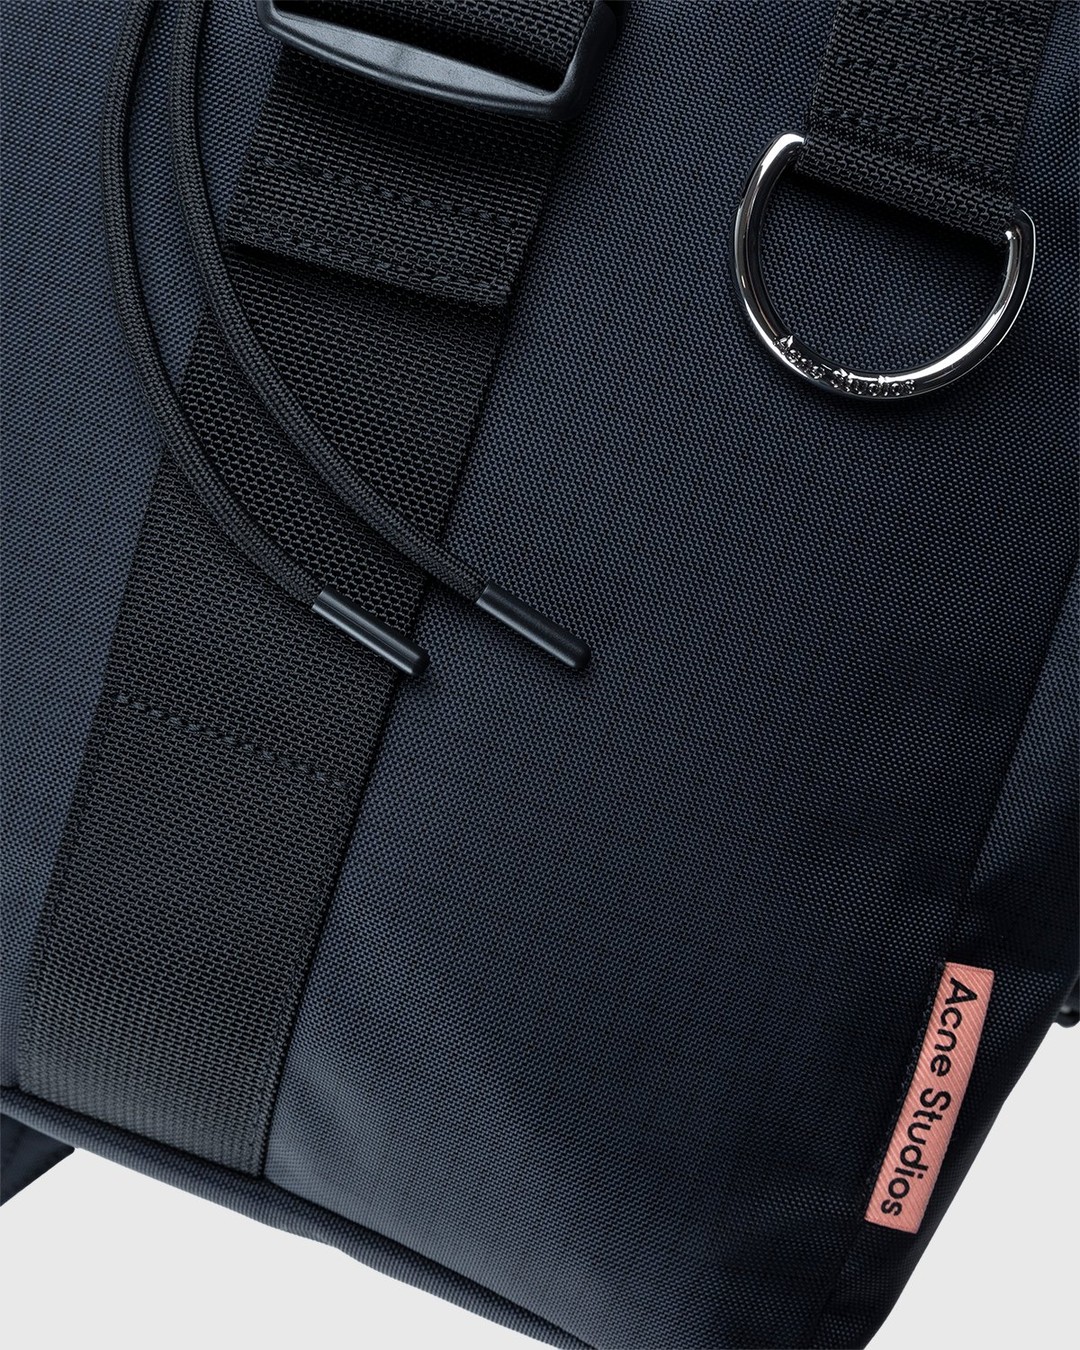 Acne Studios – Large Ripstop Backpack Black - Bags - Black - Image 3